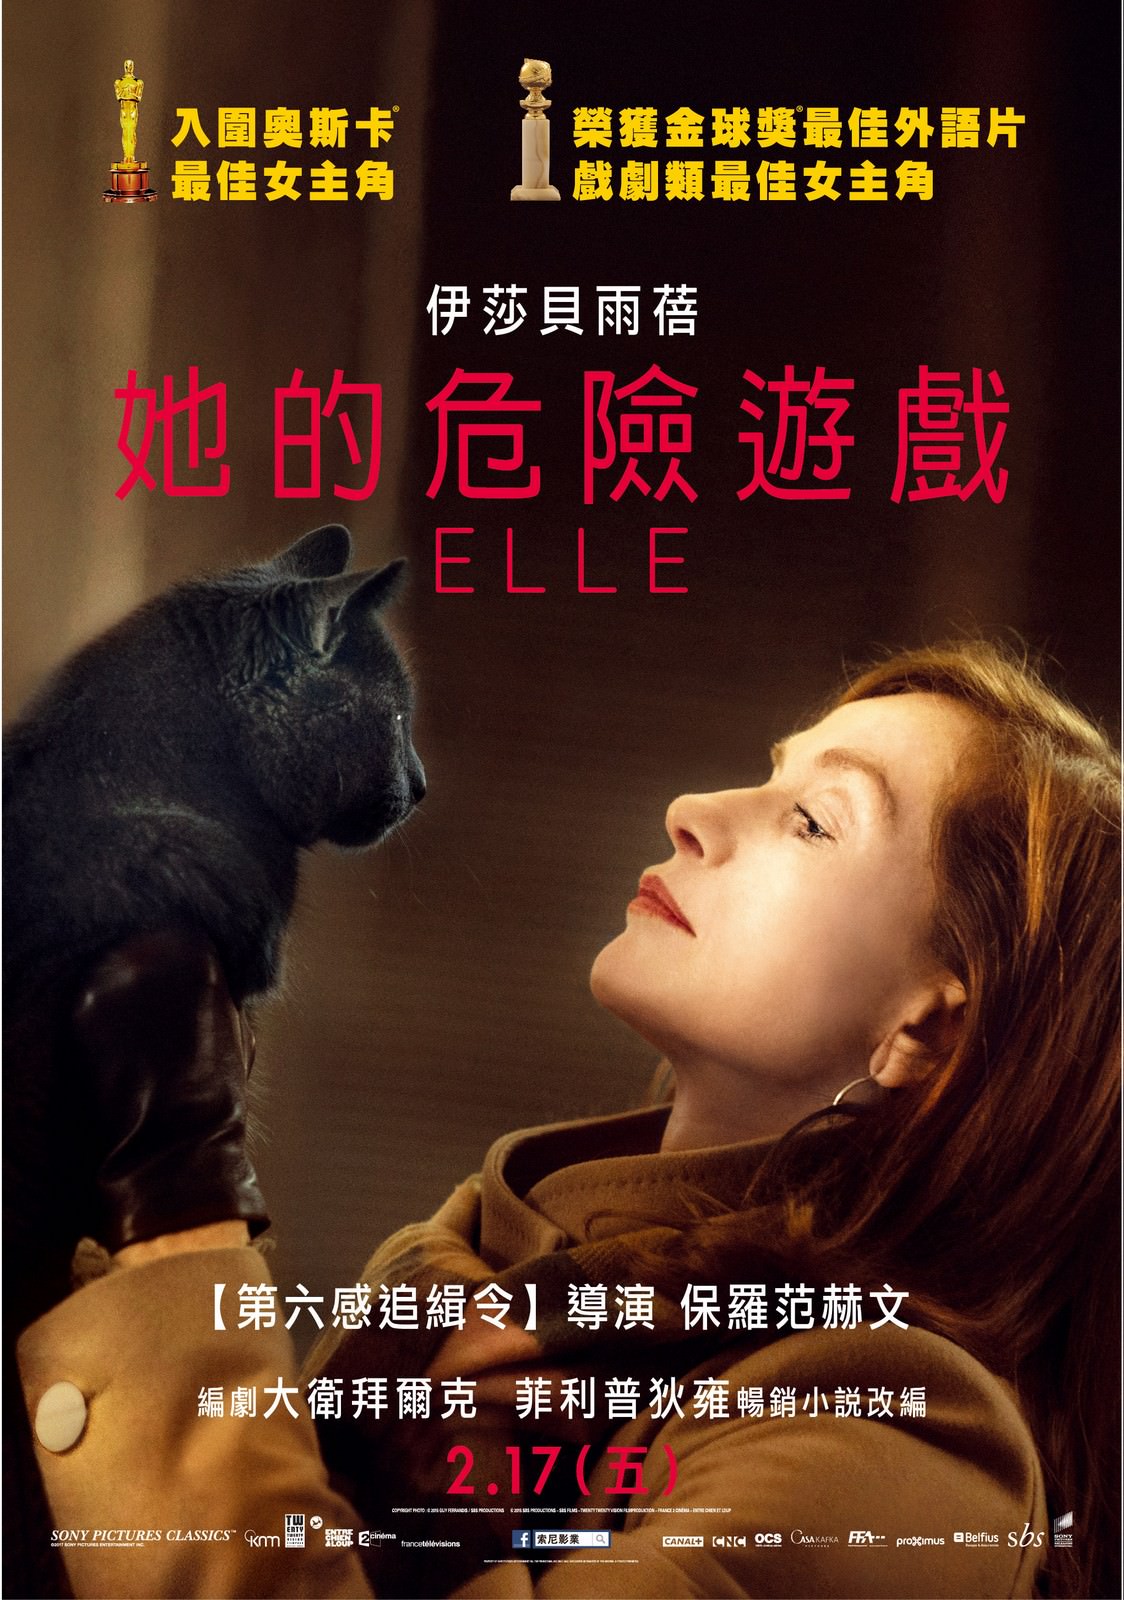 Movie, Elle(法國, 2016年) / 她的危險遊戲(台灣) / 烈女本色(香港) / 她(網路), 電影海報, 台灣